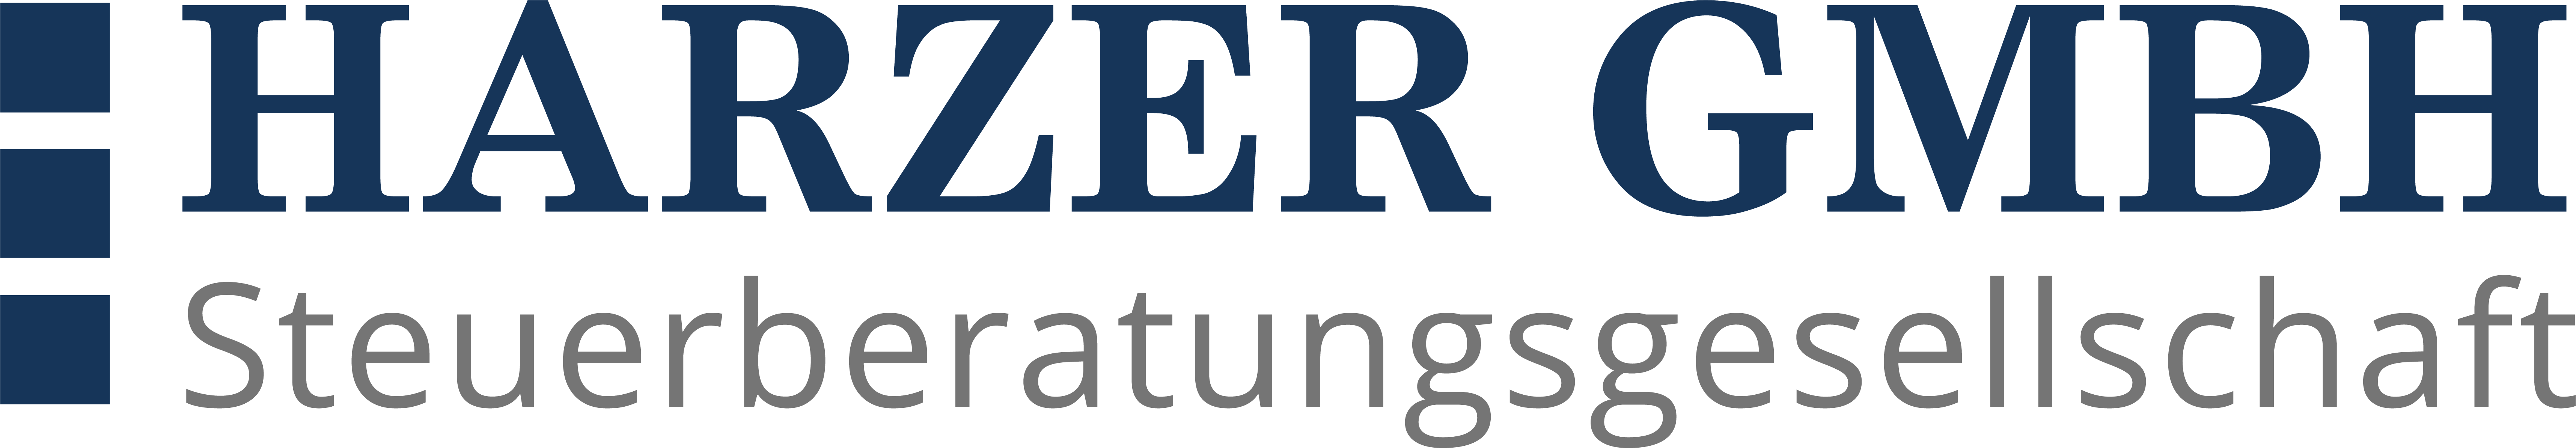 Harzer GmbH Steuerberatungsgesellschaft